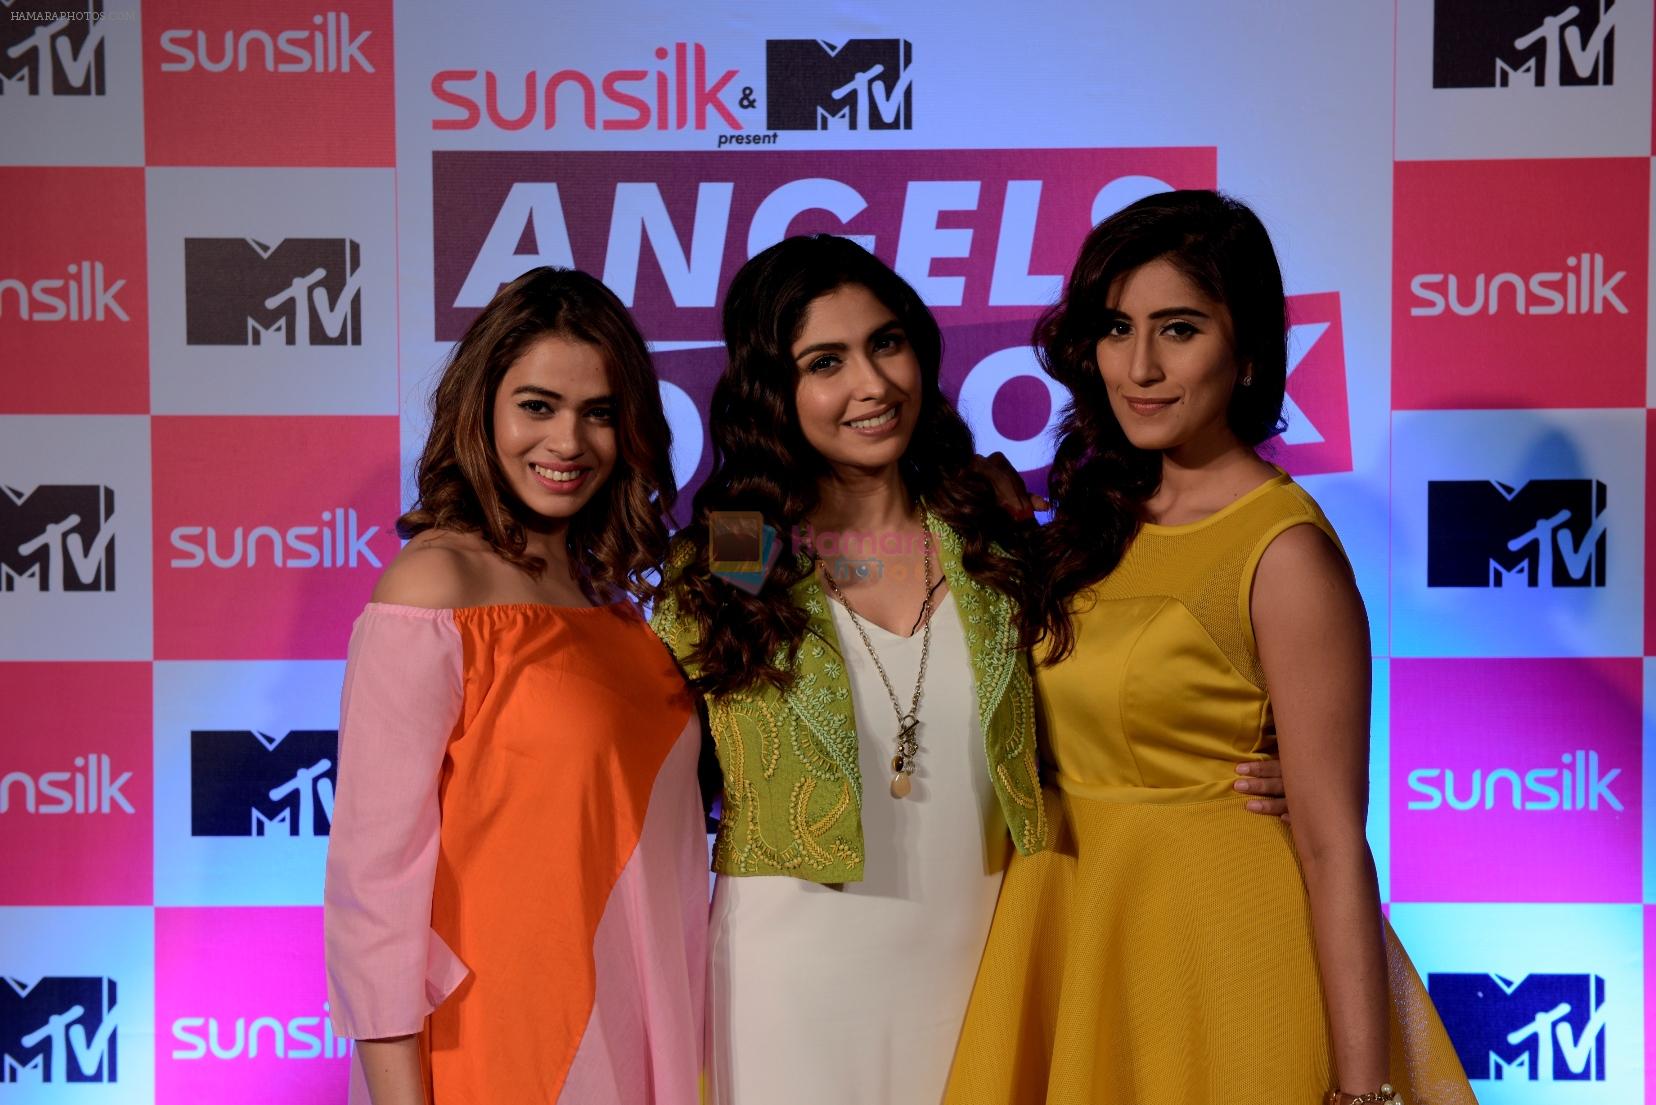 Sunsilk & MTV present Angels of Rock - Angels Shalmali Kholgade, Anusha Mani and Akasa Singh